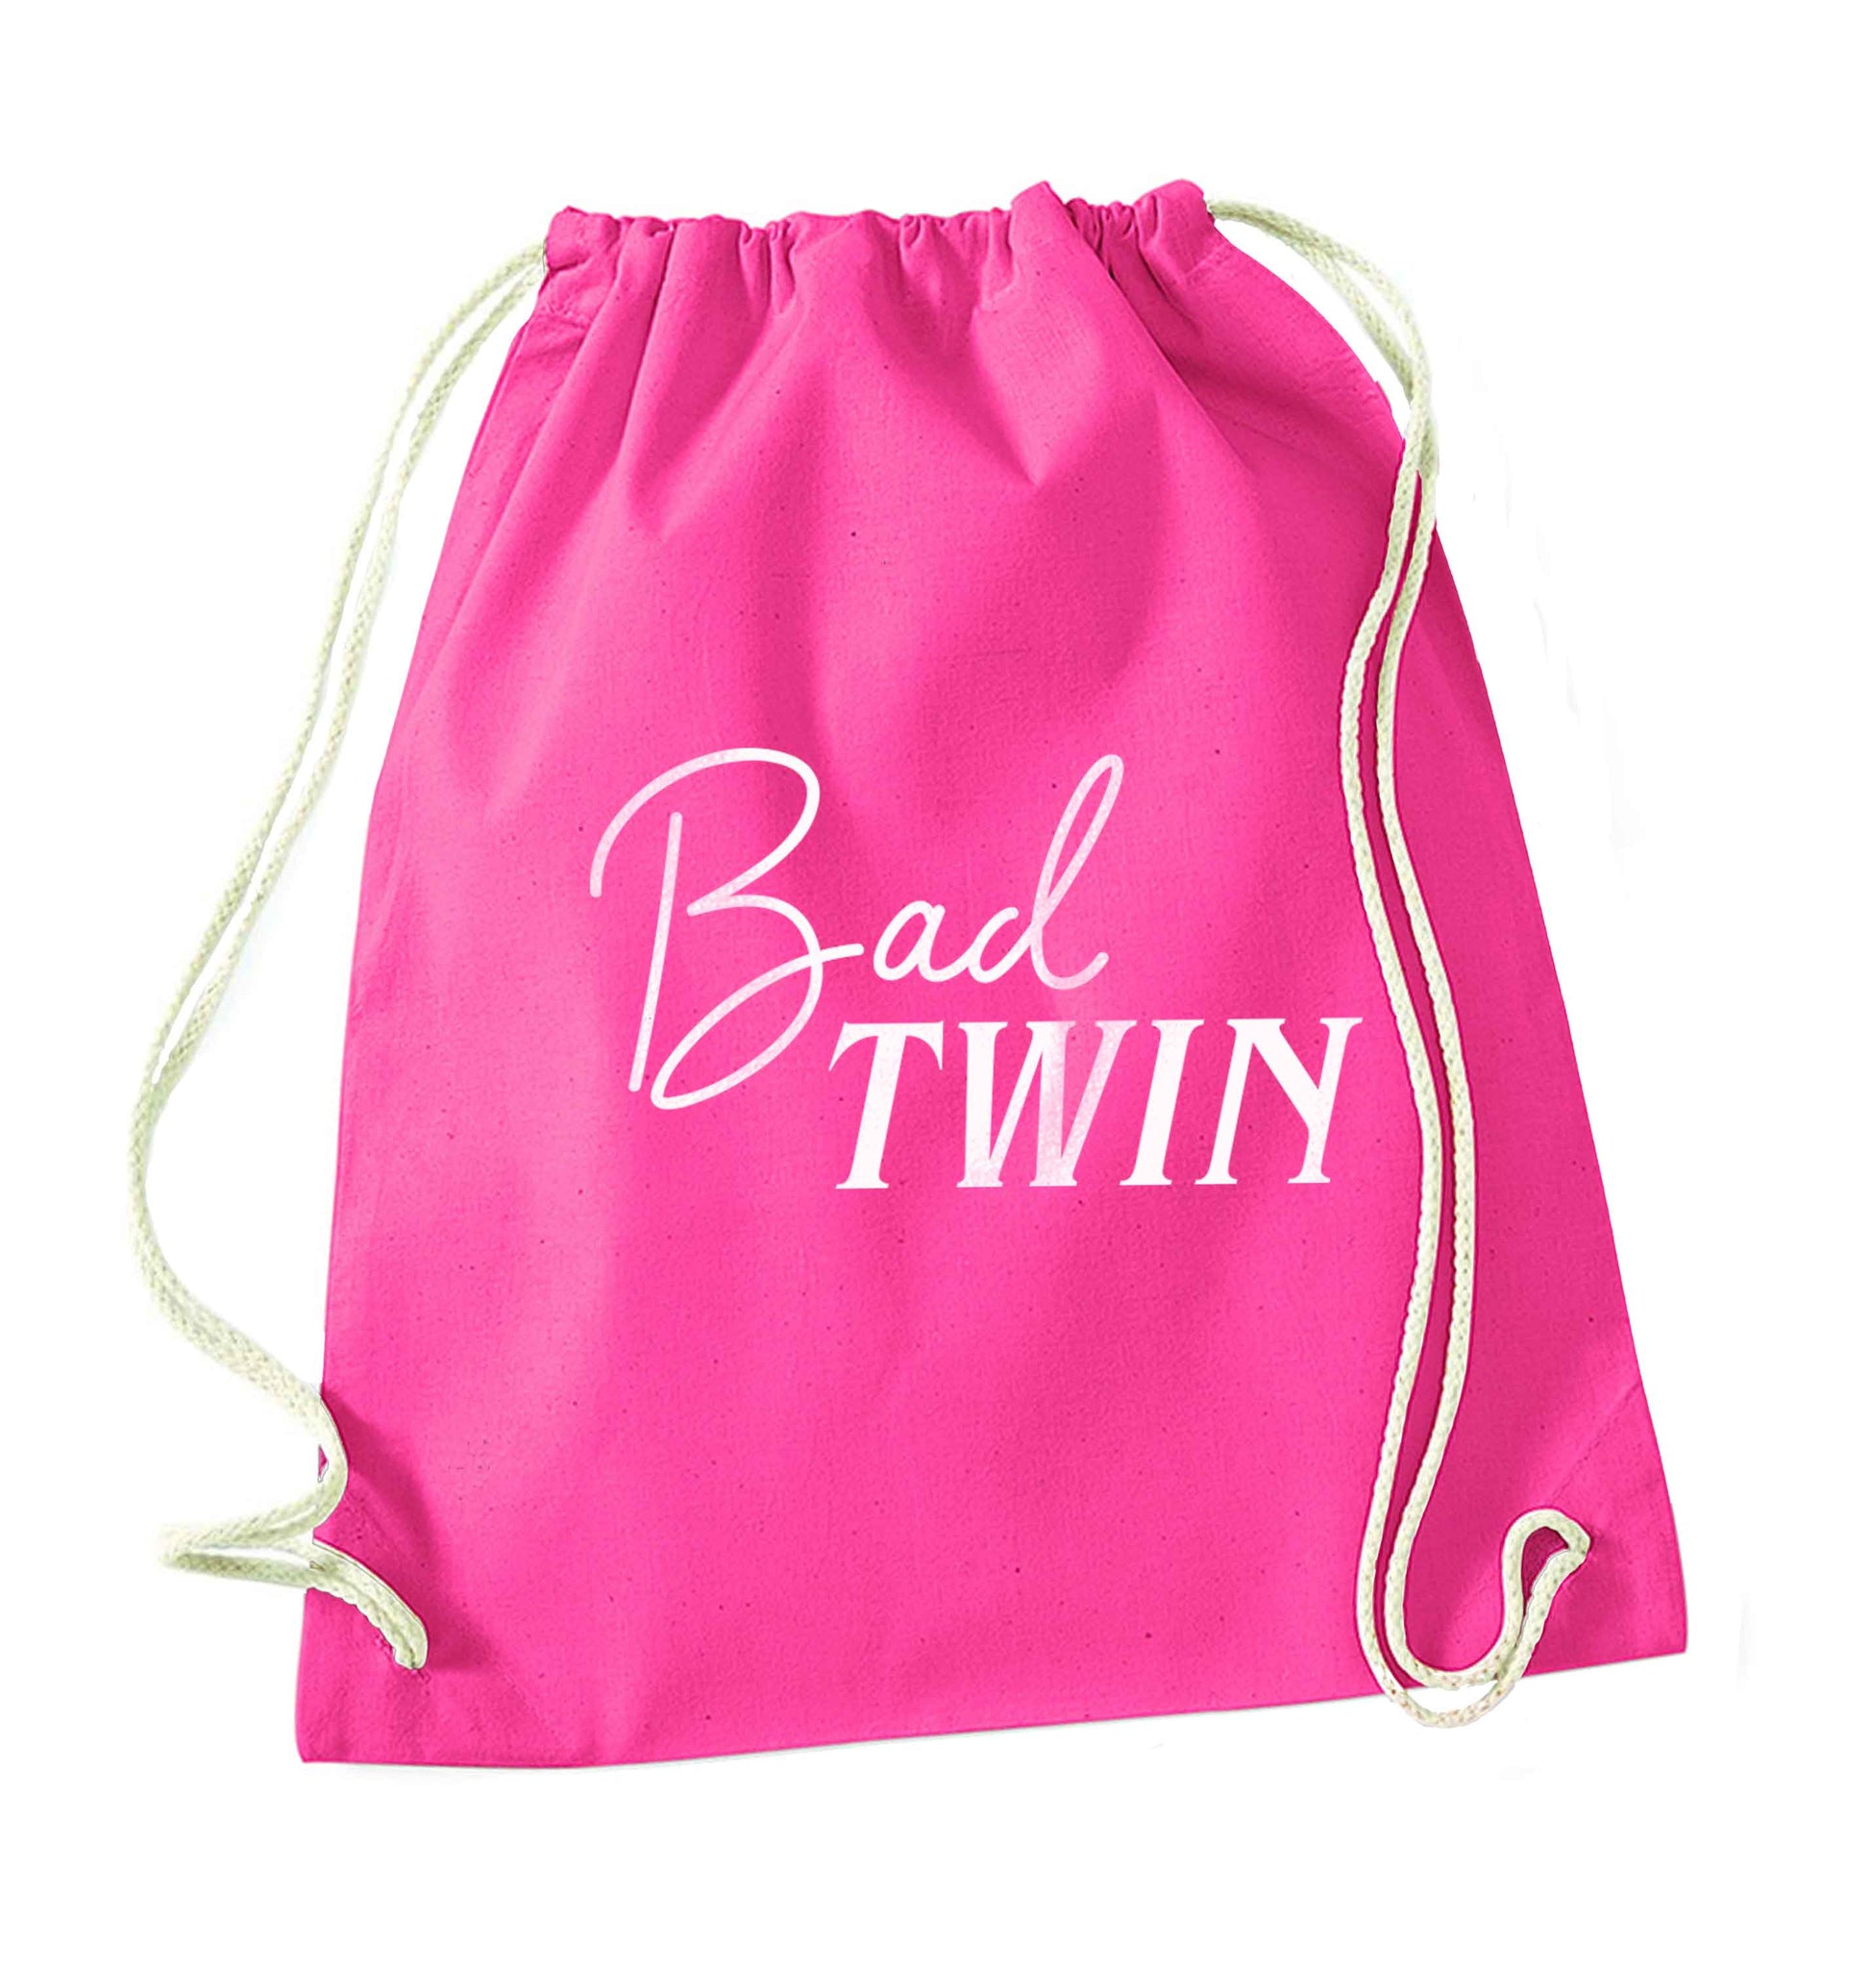 Bad twin pink drawstring bag